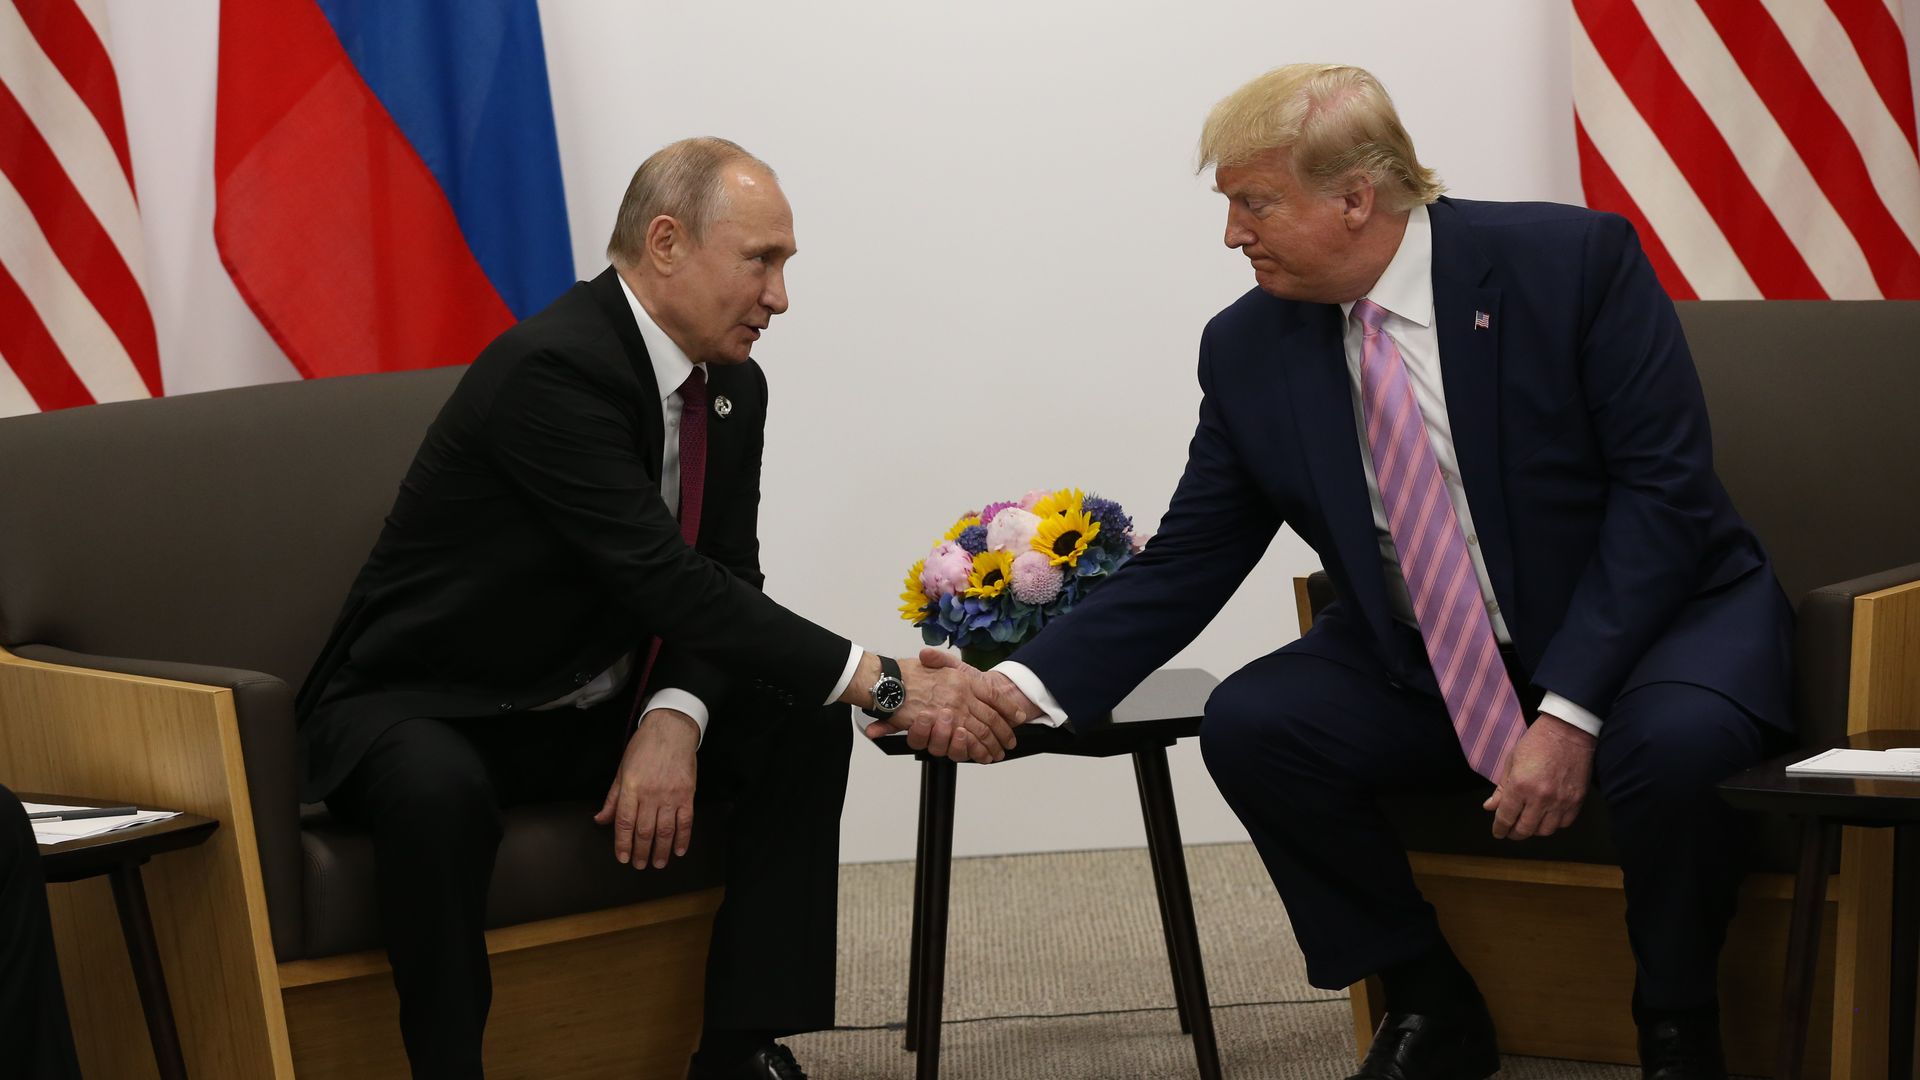 President Trump and Russian President Vladimir Putin shaking hands